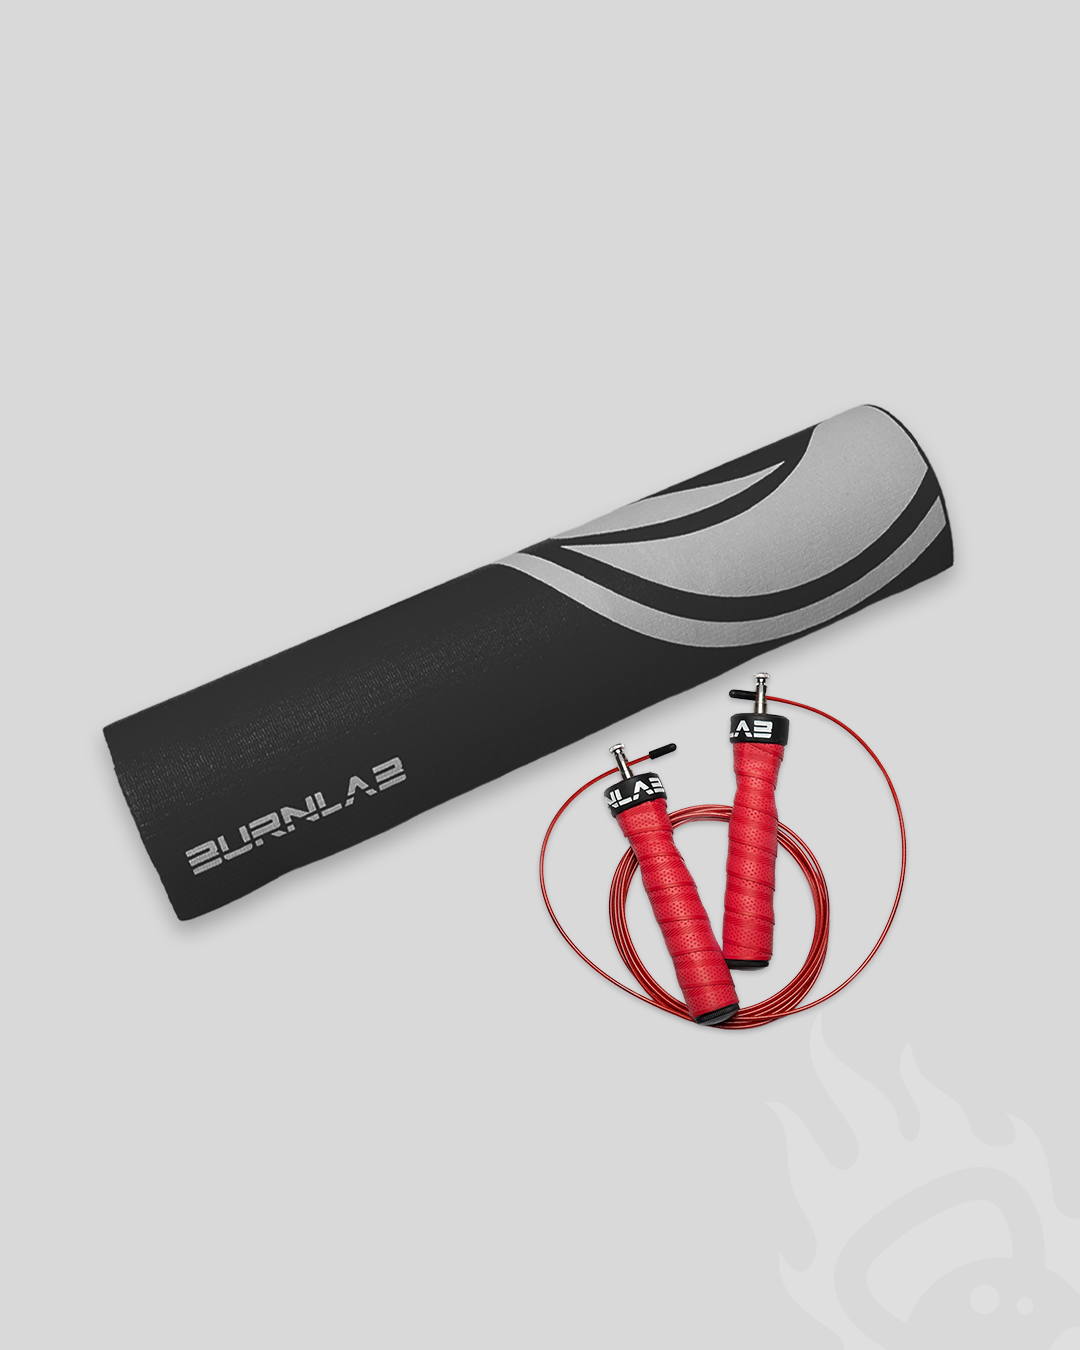 Yoga Mat and Antislip Performance Skipping Rope - Burnlab.Co